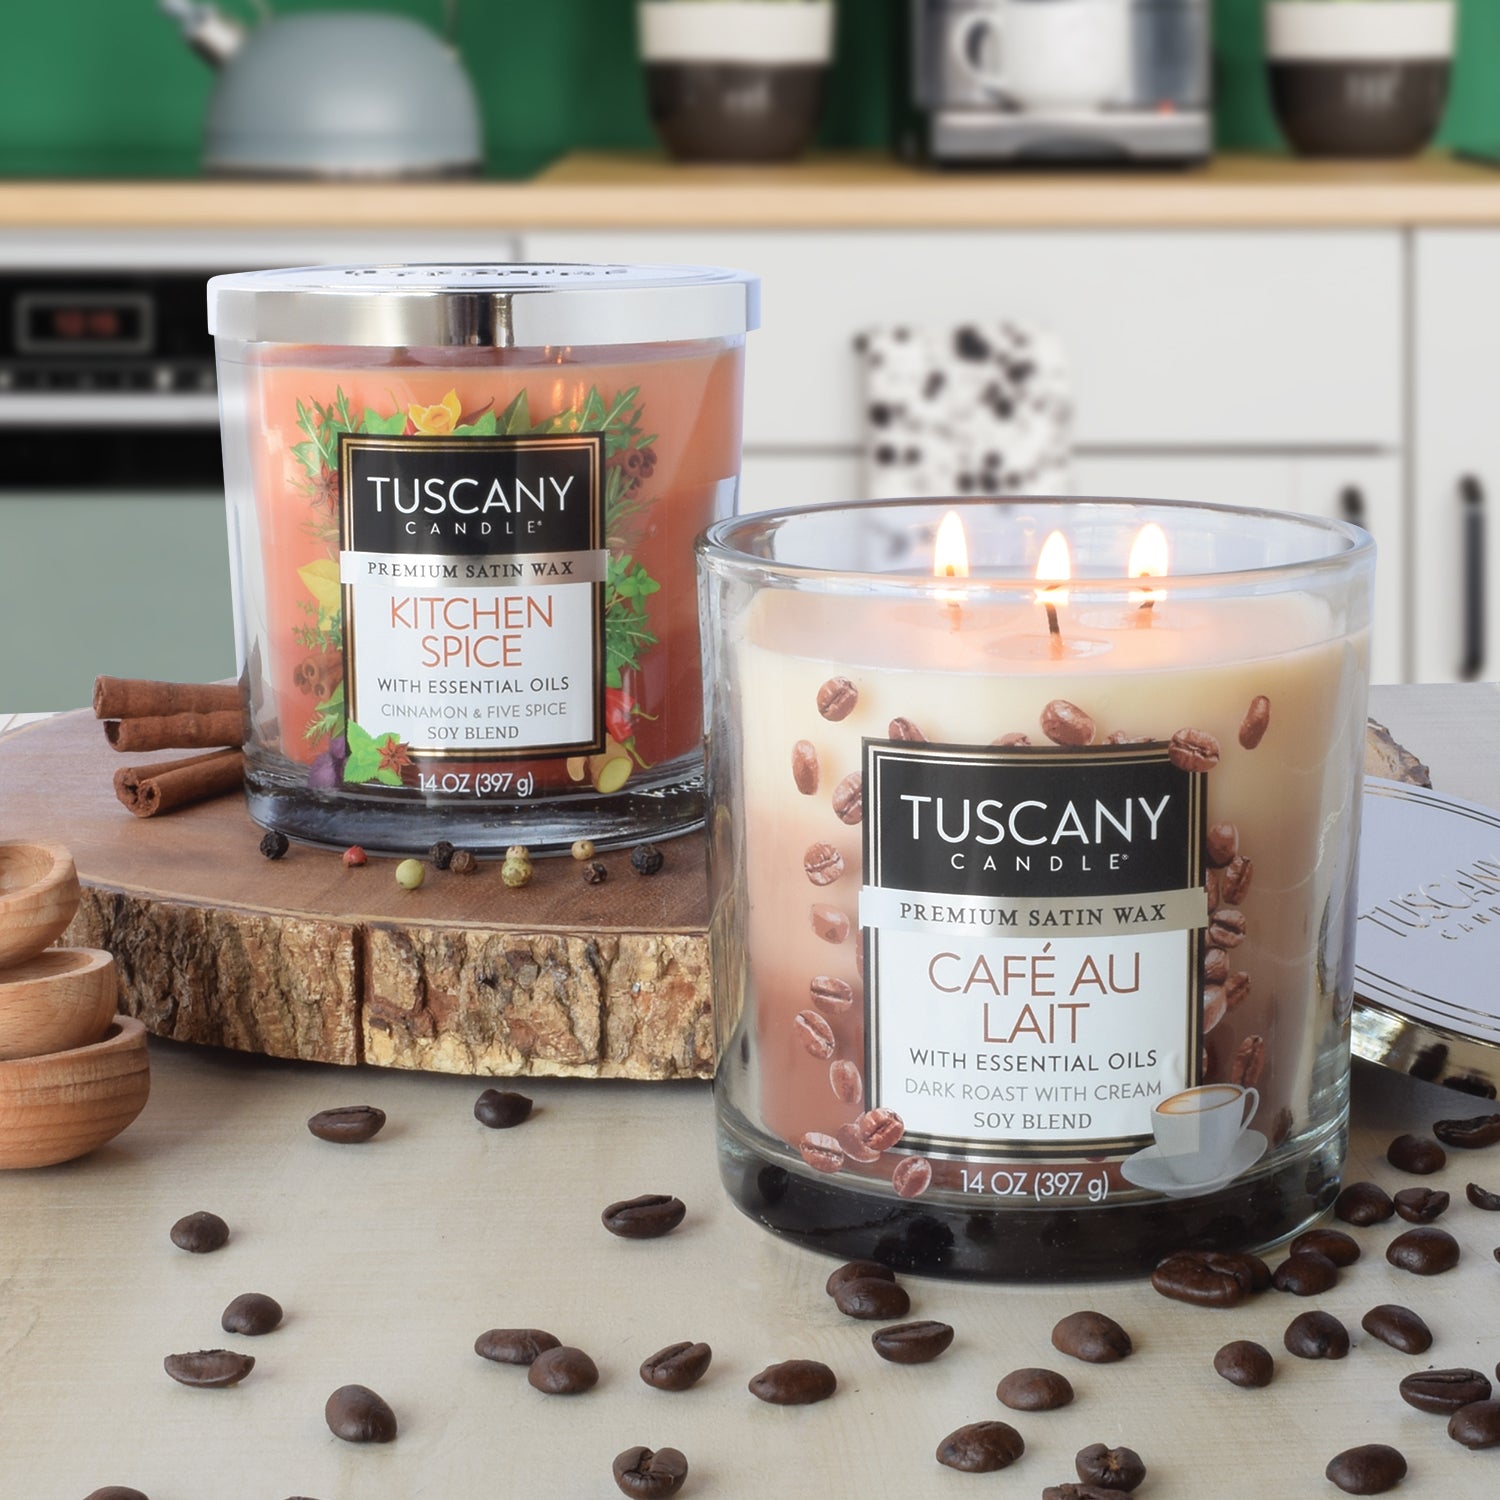 A mesmerizing Tuscany Candle Café Au Lait Long-Lasting Scented Jar Candle (14 oz) reminiscent of a cozy cafe au lait experience.